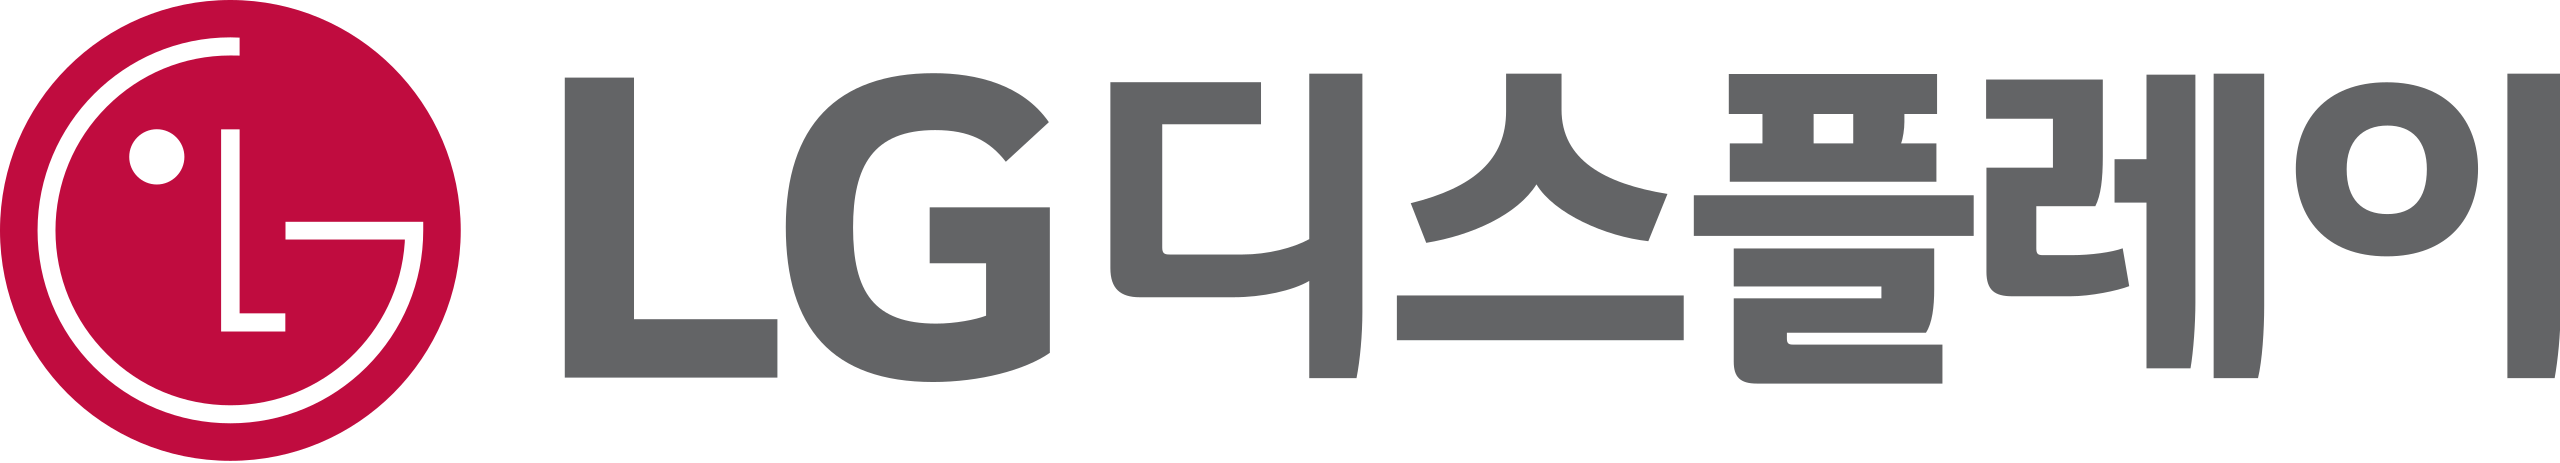 File:LG Display logo (korean).svg - Wikimedia Commons